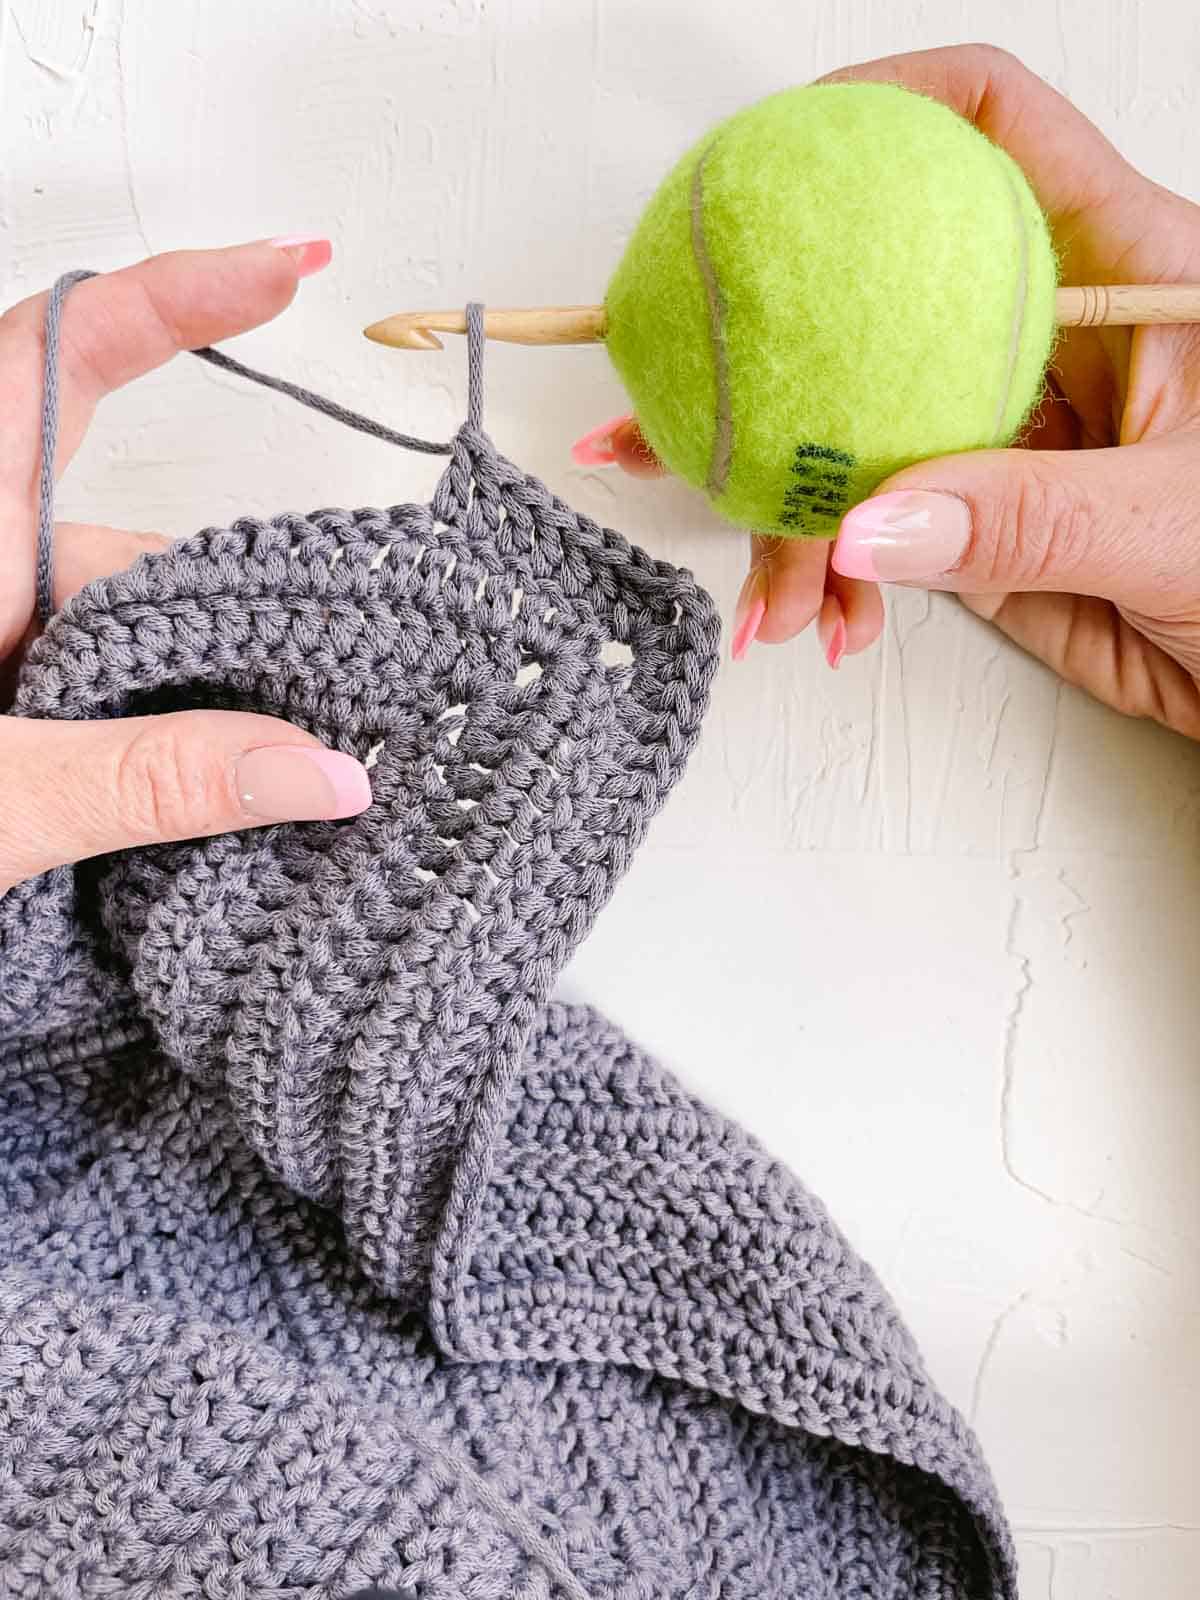 Crocheting with a DIY ergonomic crochet hook made from a tennis ball. 